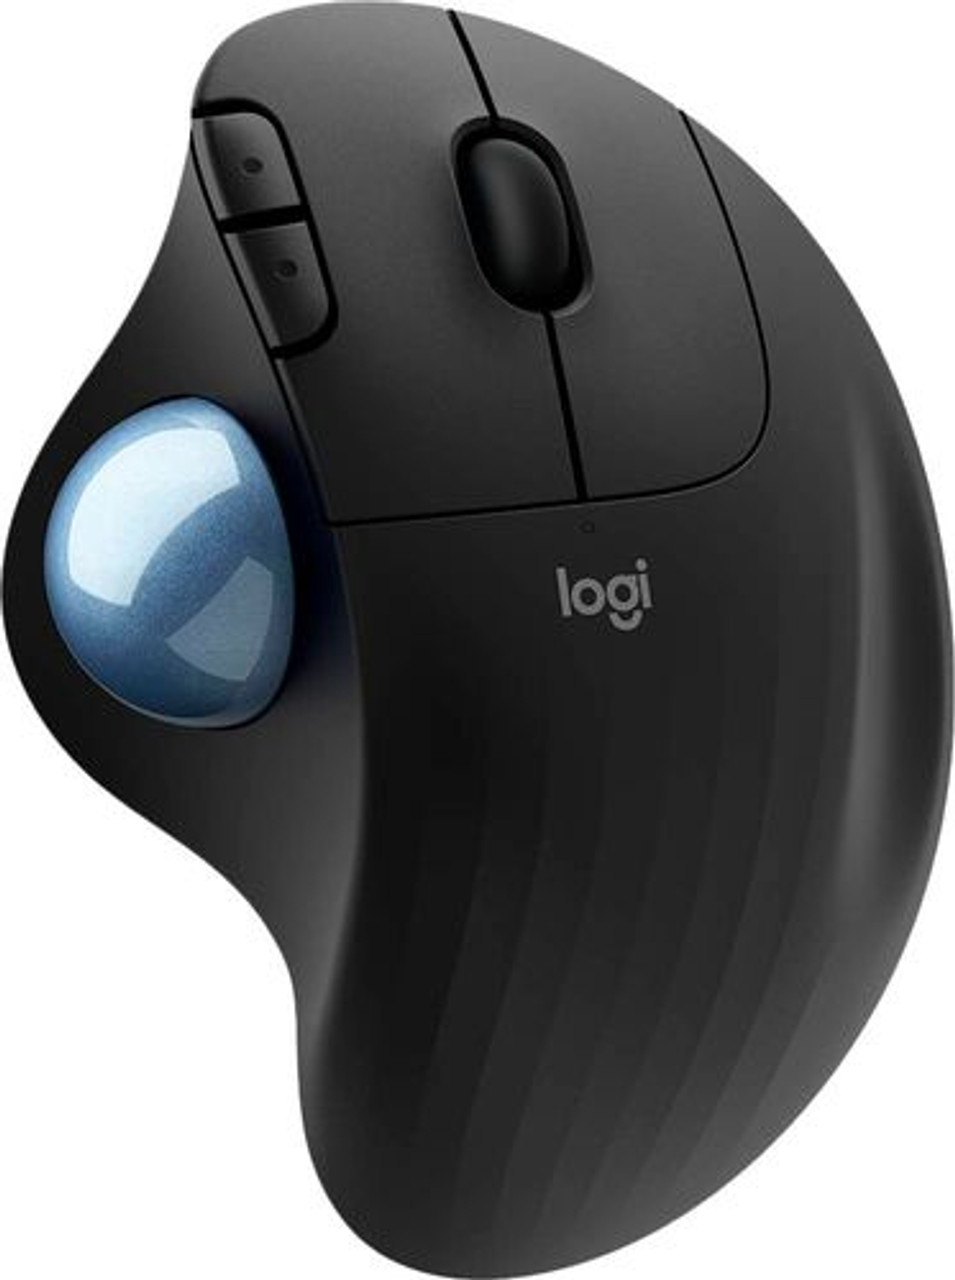 Logitech - ERGO M575 Wireless Trackball Mouse - Black